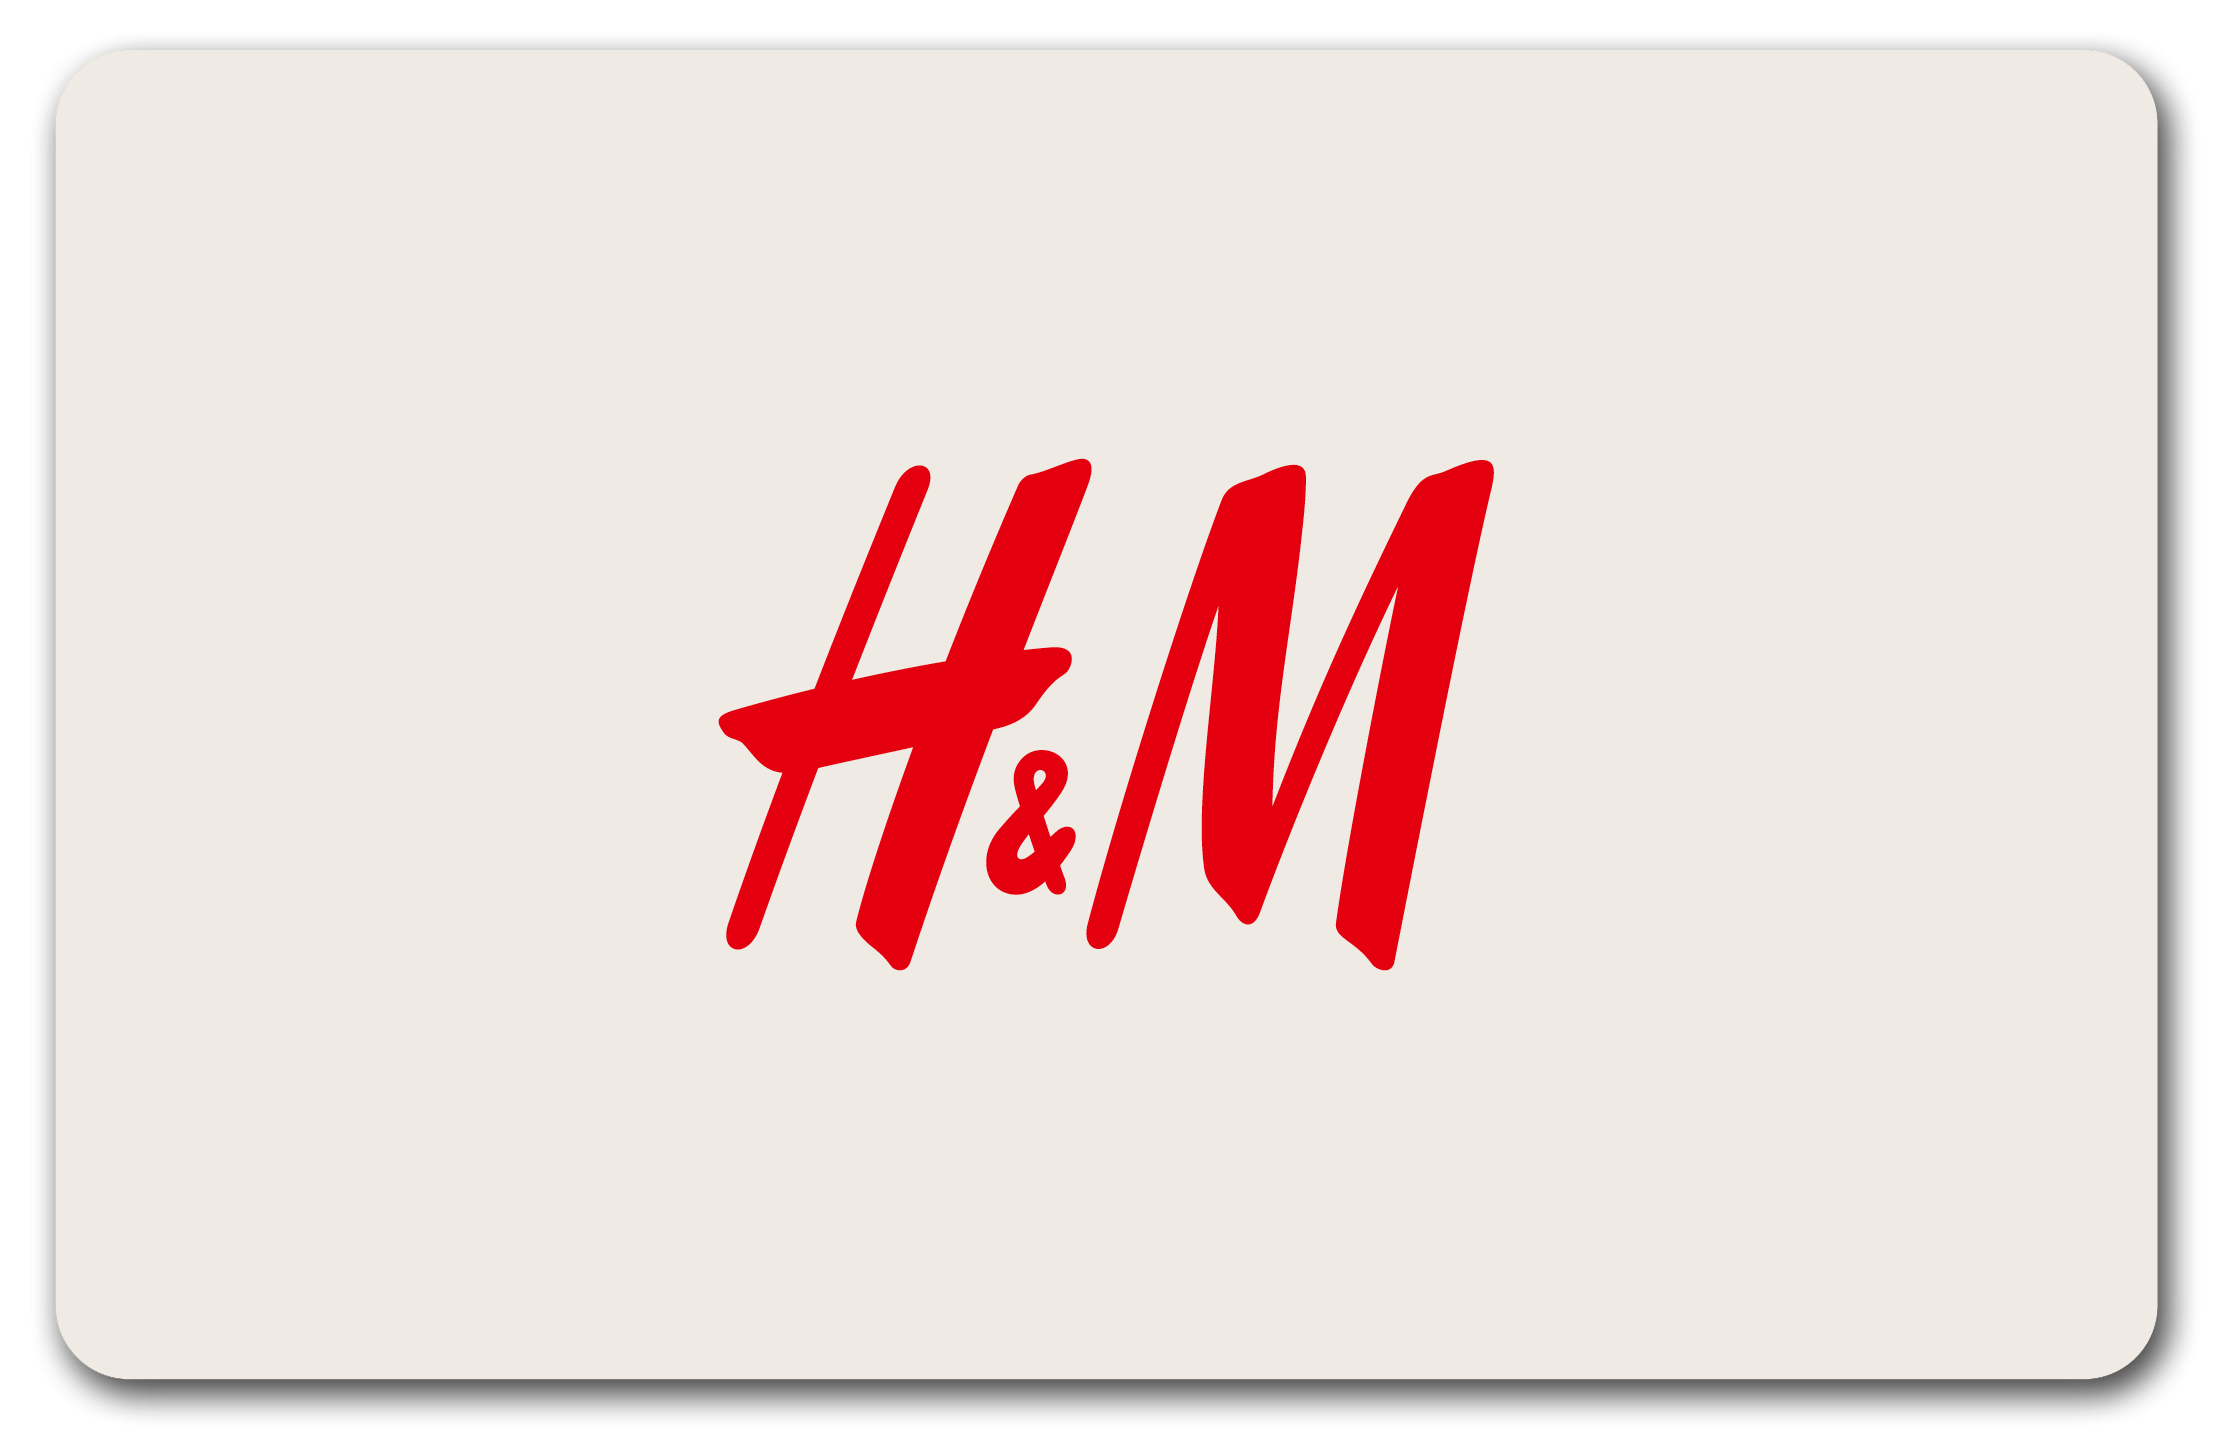 H&M Valence